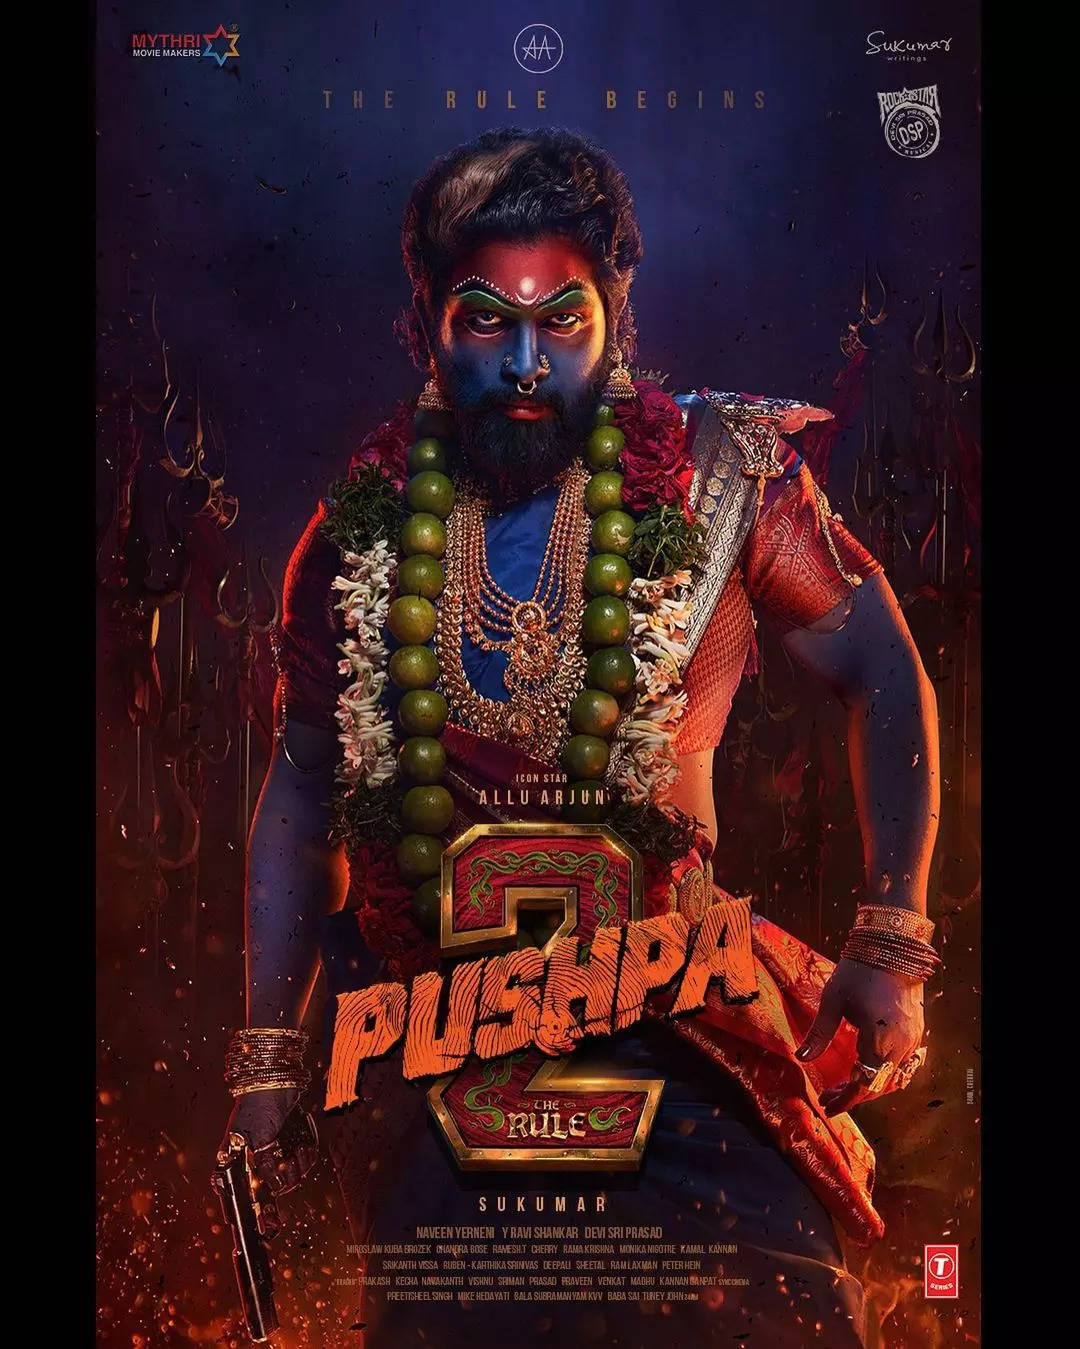 Did Allu Arjun's Pushpa 2 Go The Kaali Way? New Poster SHOCKINGLY Similar To Leena Manimekalai CONTROVERSIAL Film Art | Entertainment News, Times Now